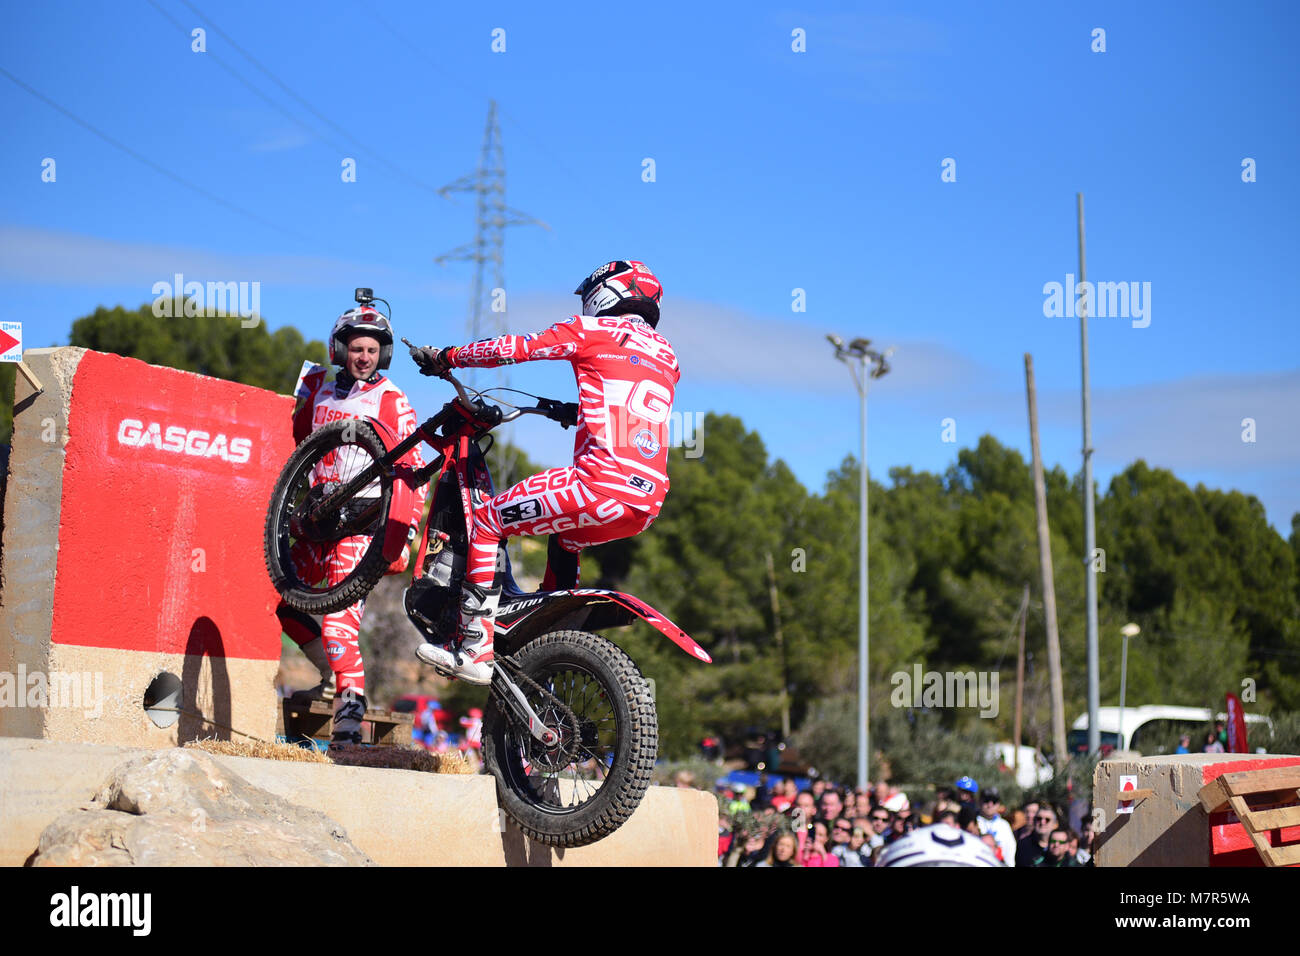 LA NUCIA, SPAIN - FEBRUARY 11th 2018: Jeroni Fajardo on a GasGas bike masters an obstacle at the Spanish National Trial Championship. Stock Photo